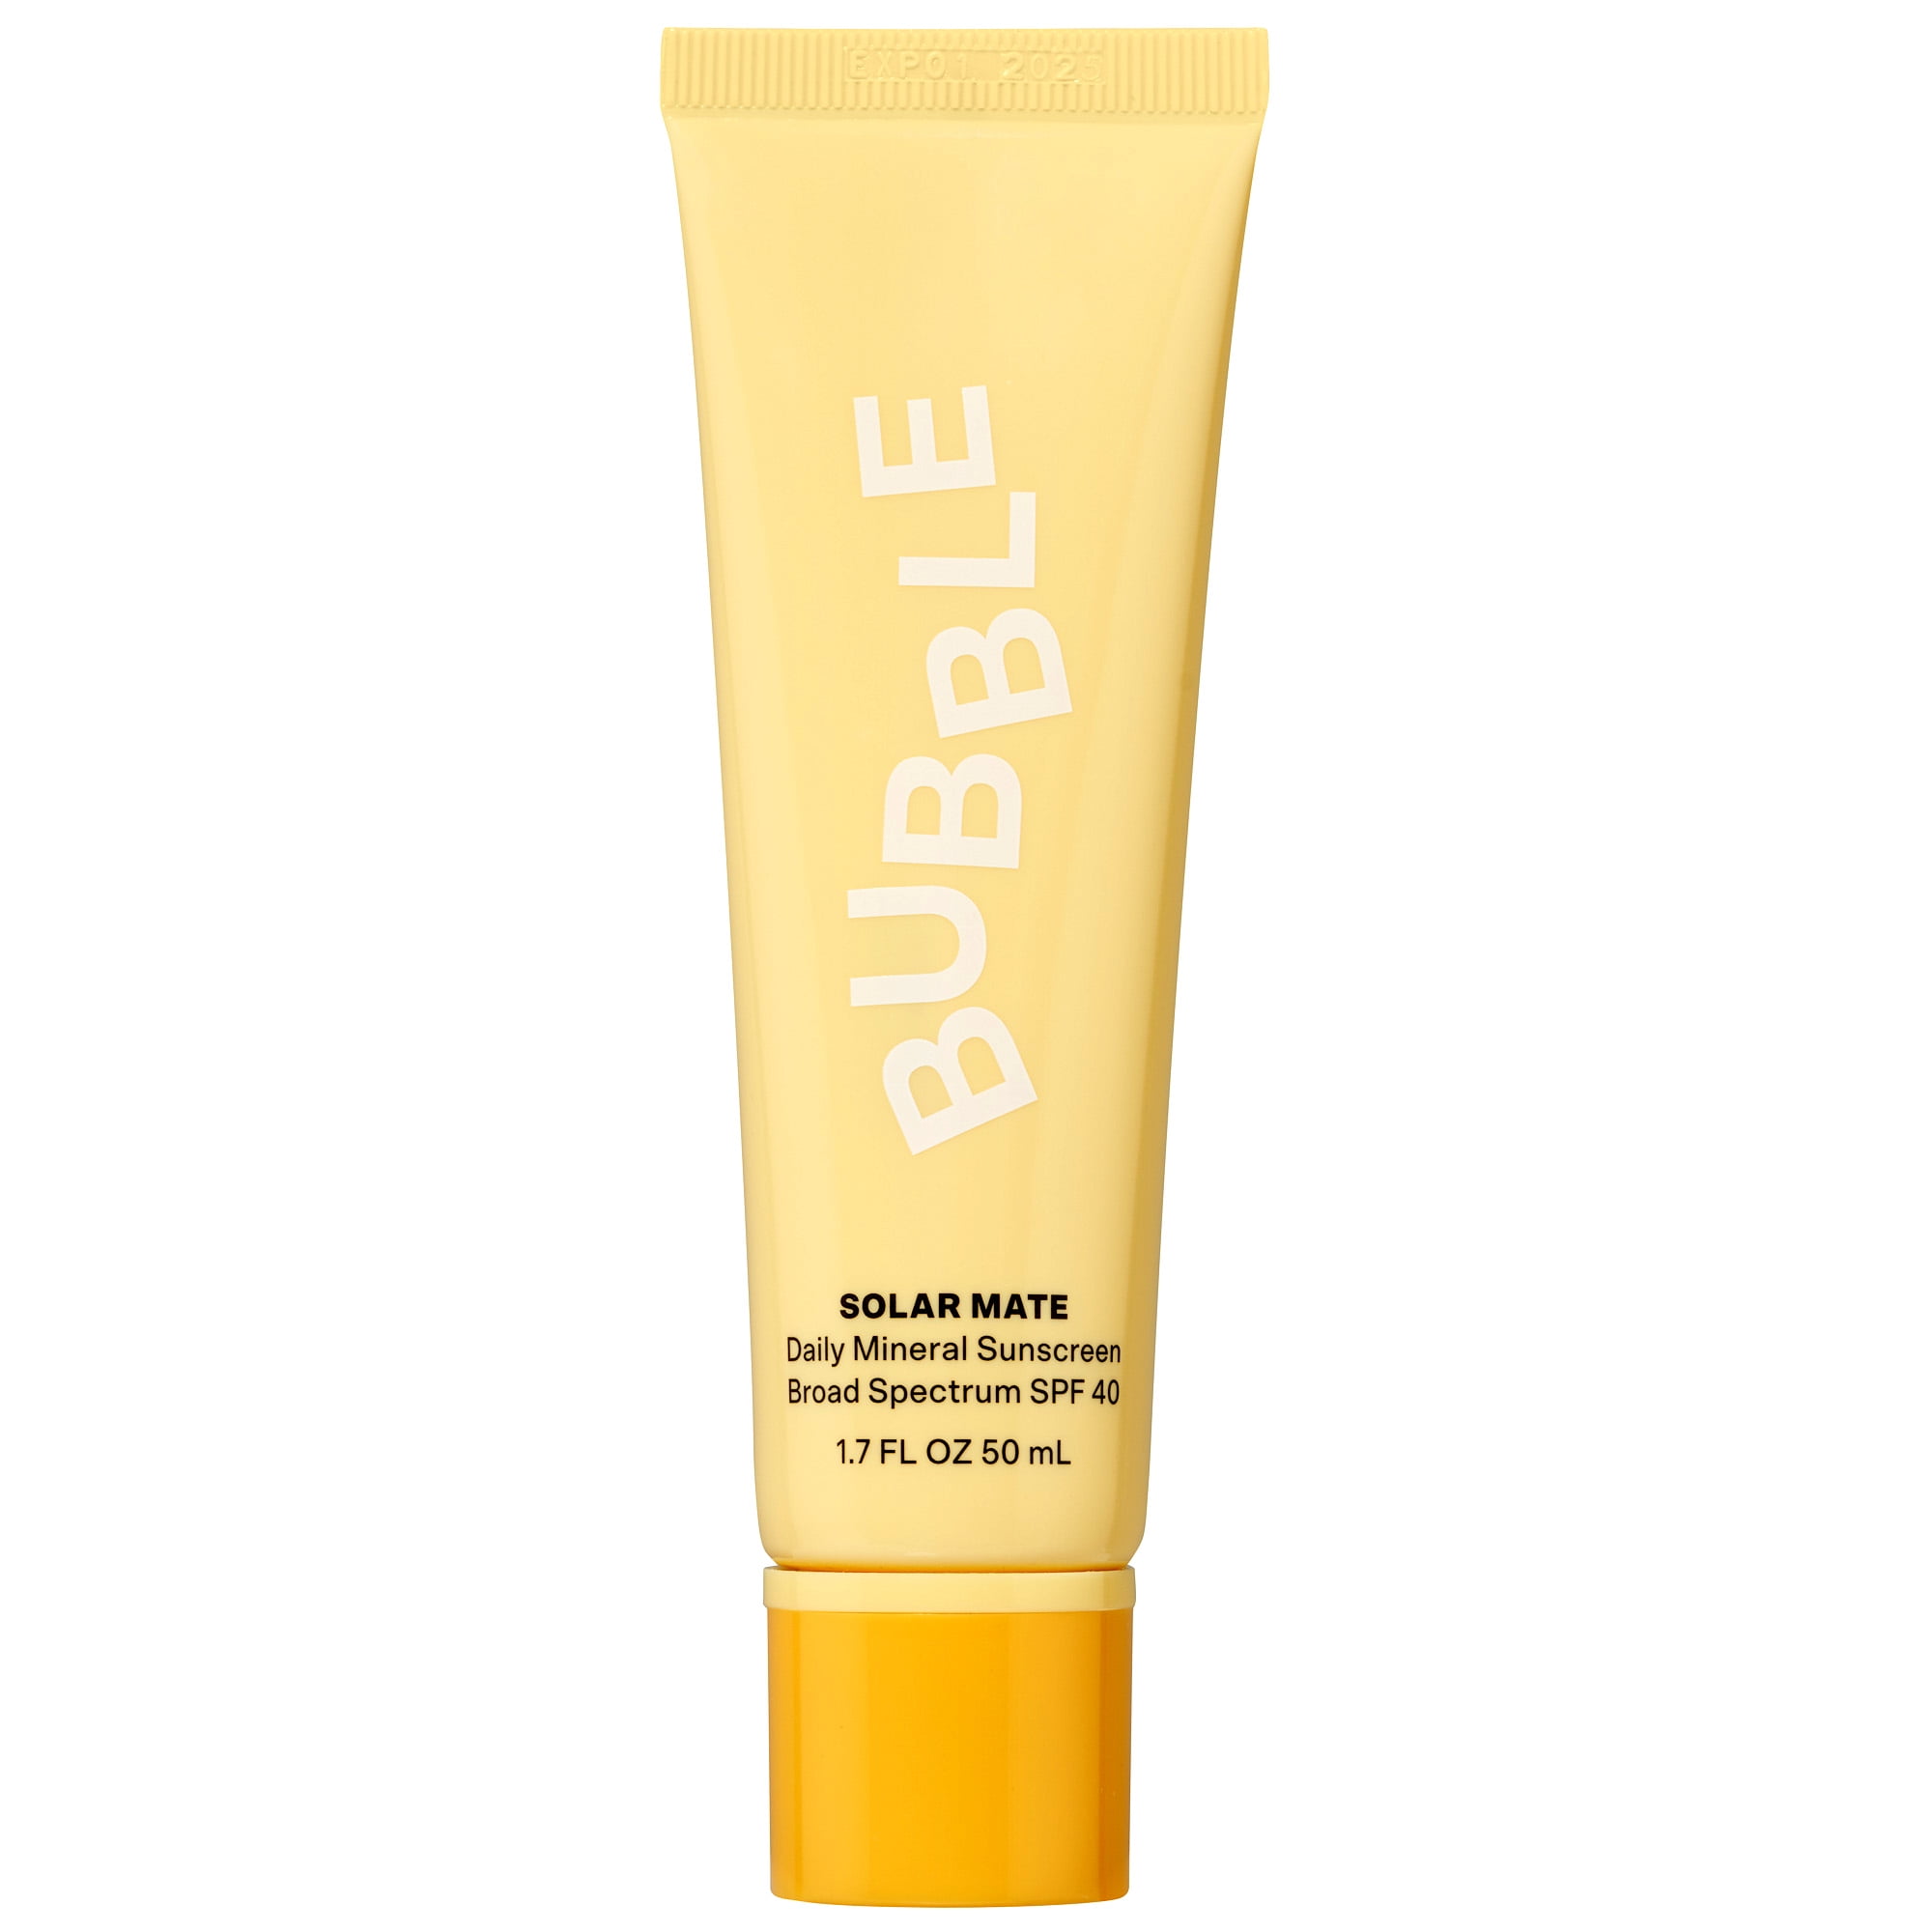 Bubble Skincare Solar Mate Mineral Sunscreen SPF 40, All Skin Types, 1.7 FL OZ / 50mL